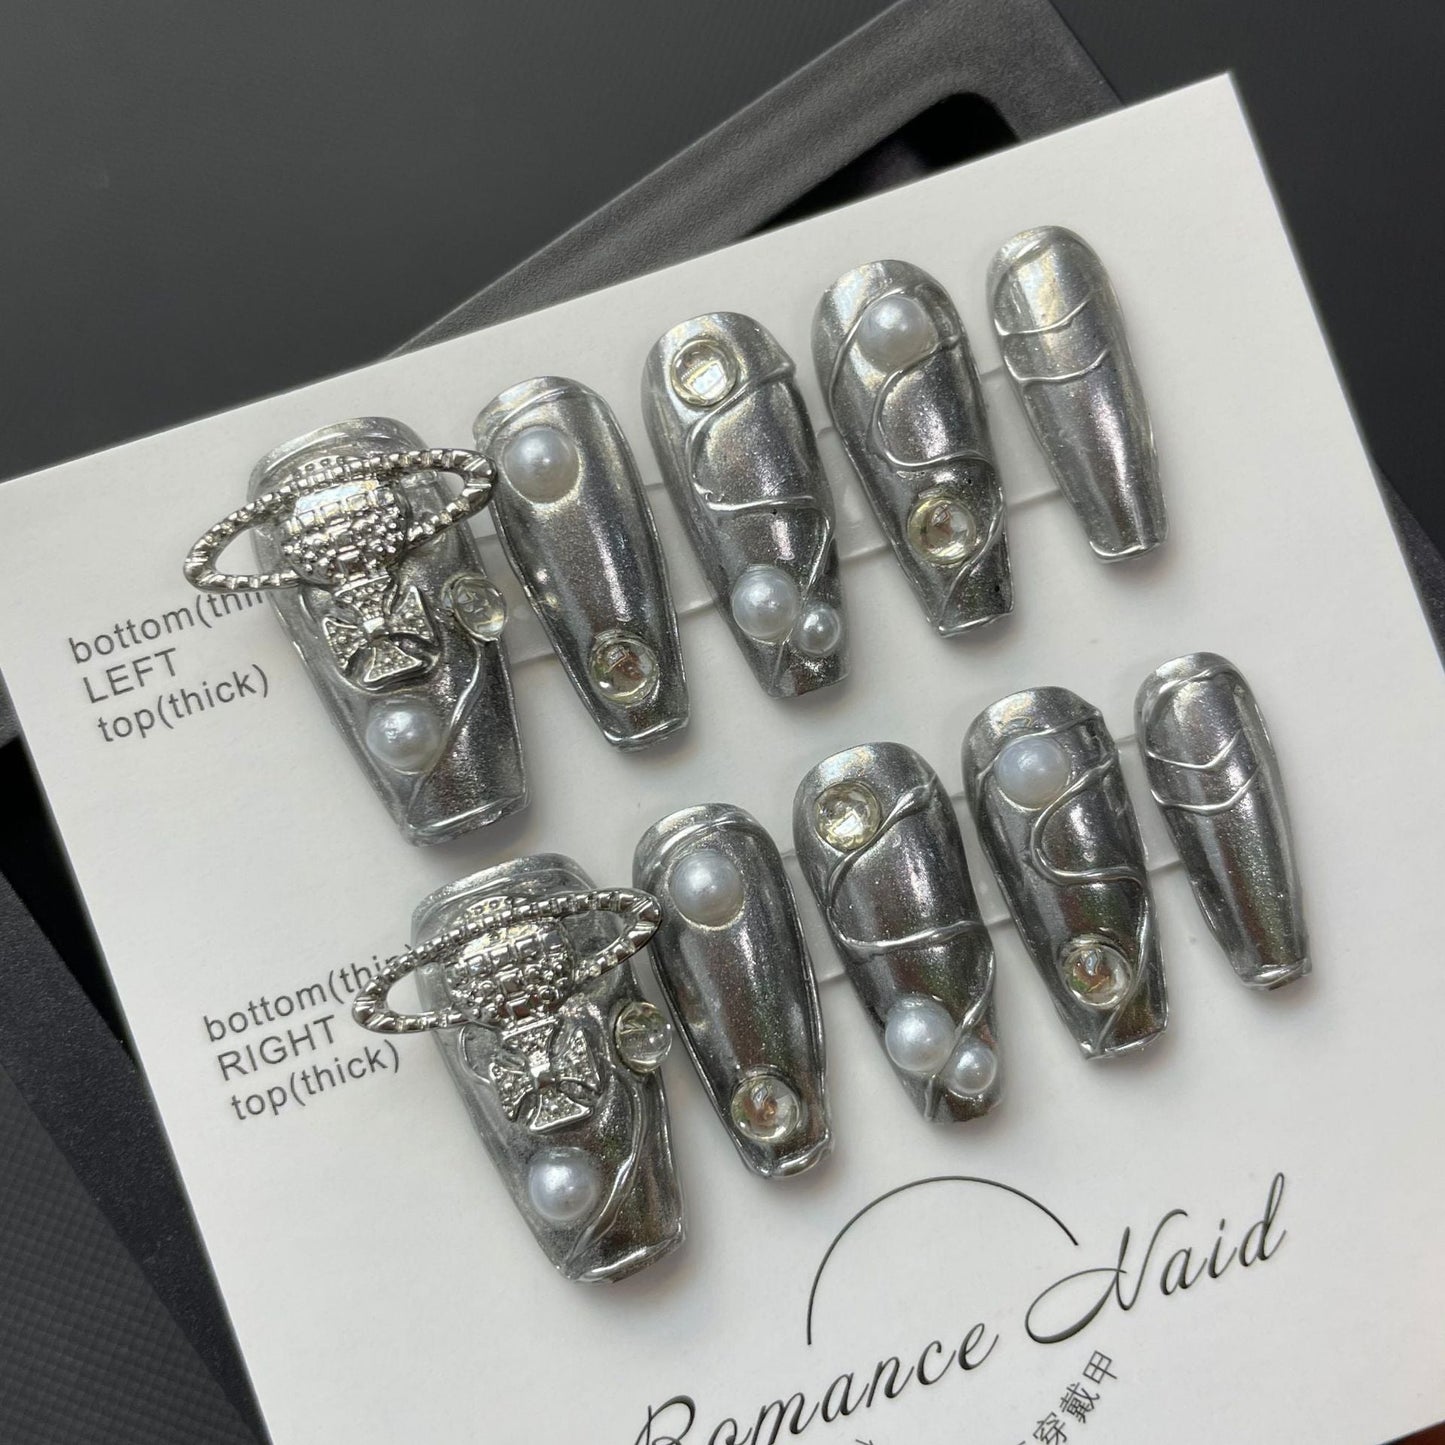 648 industry press on nails 100% handmade false nails sliver